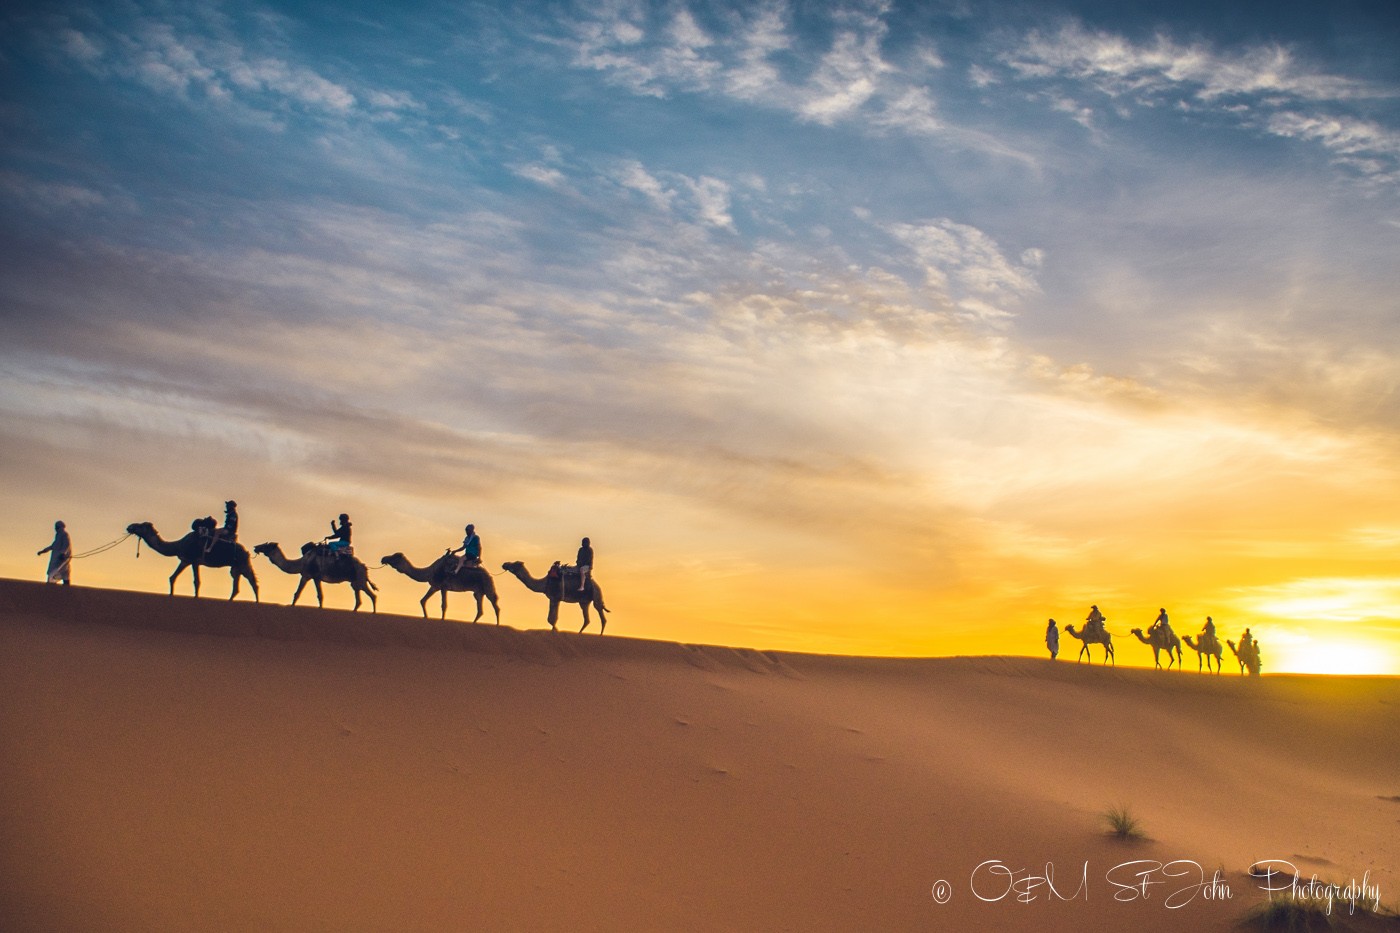 Sunrise ride back to the hotel from Erg Chebbi, Sahara Desert. Morocco